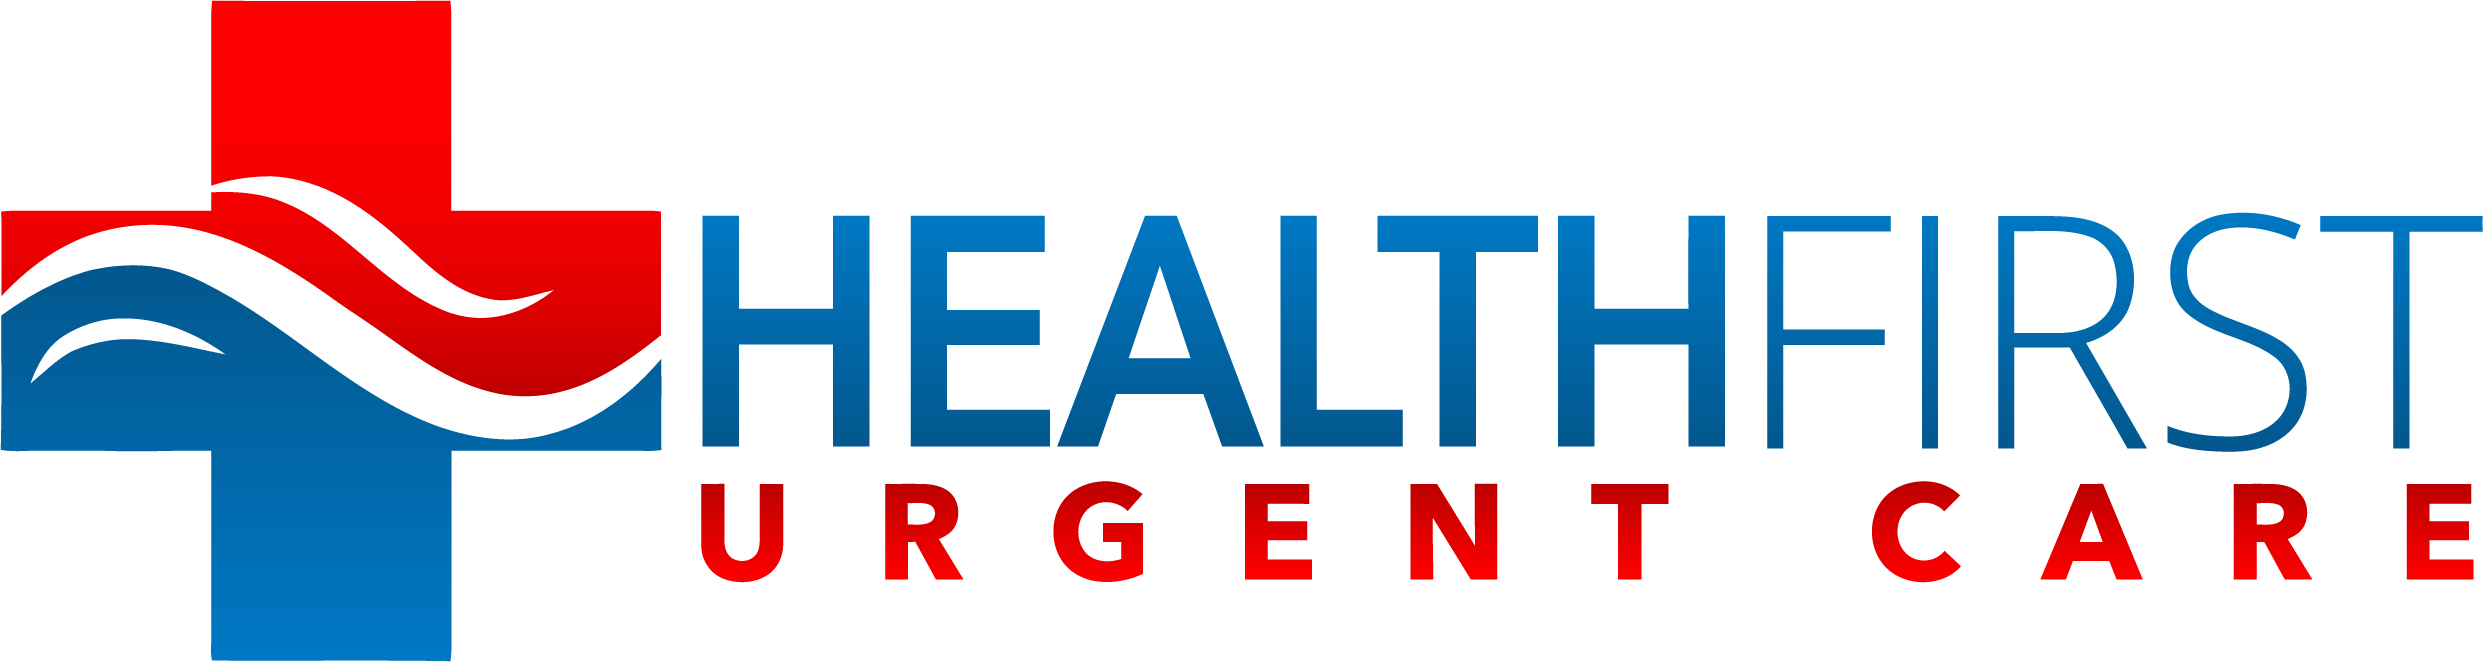 Healthfirst Urgent Care